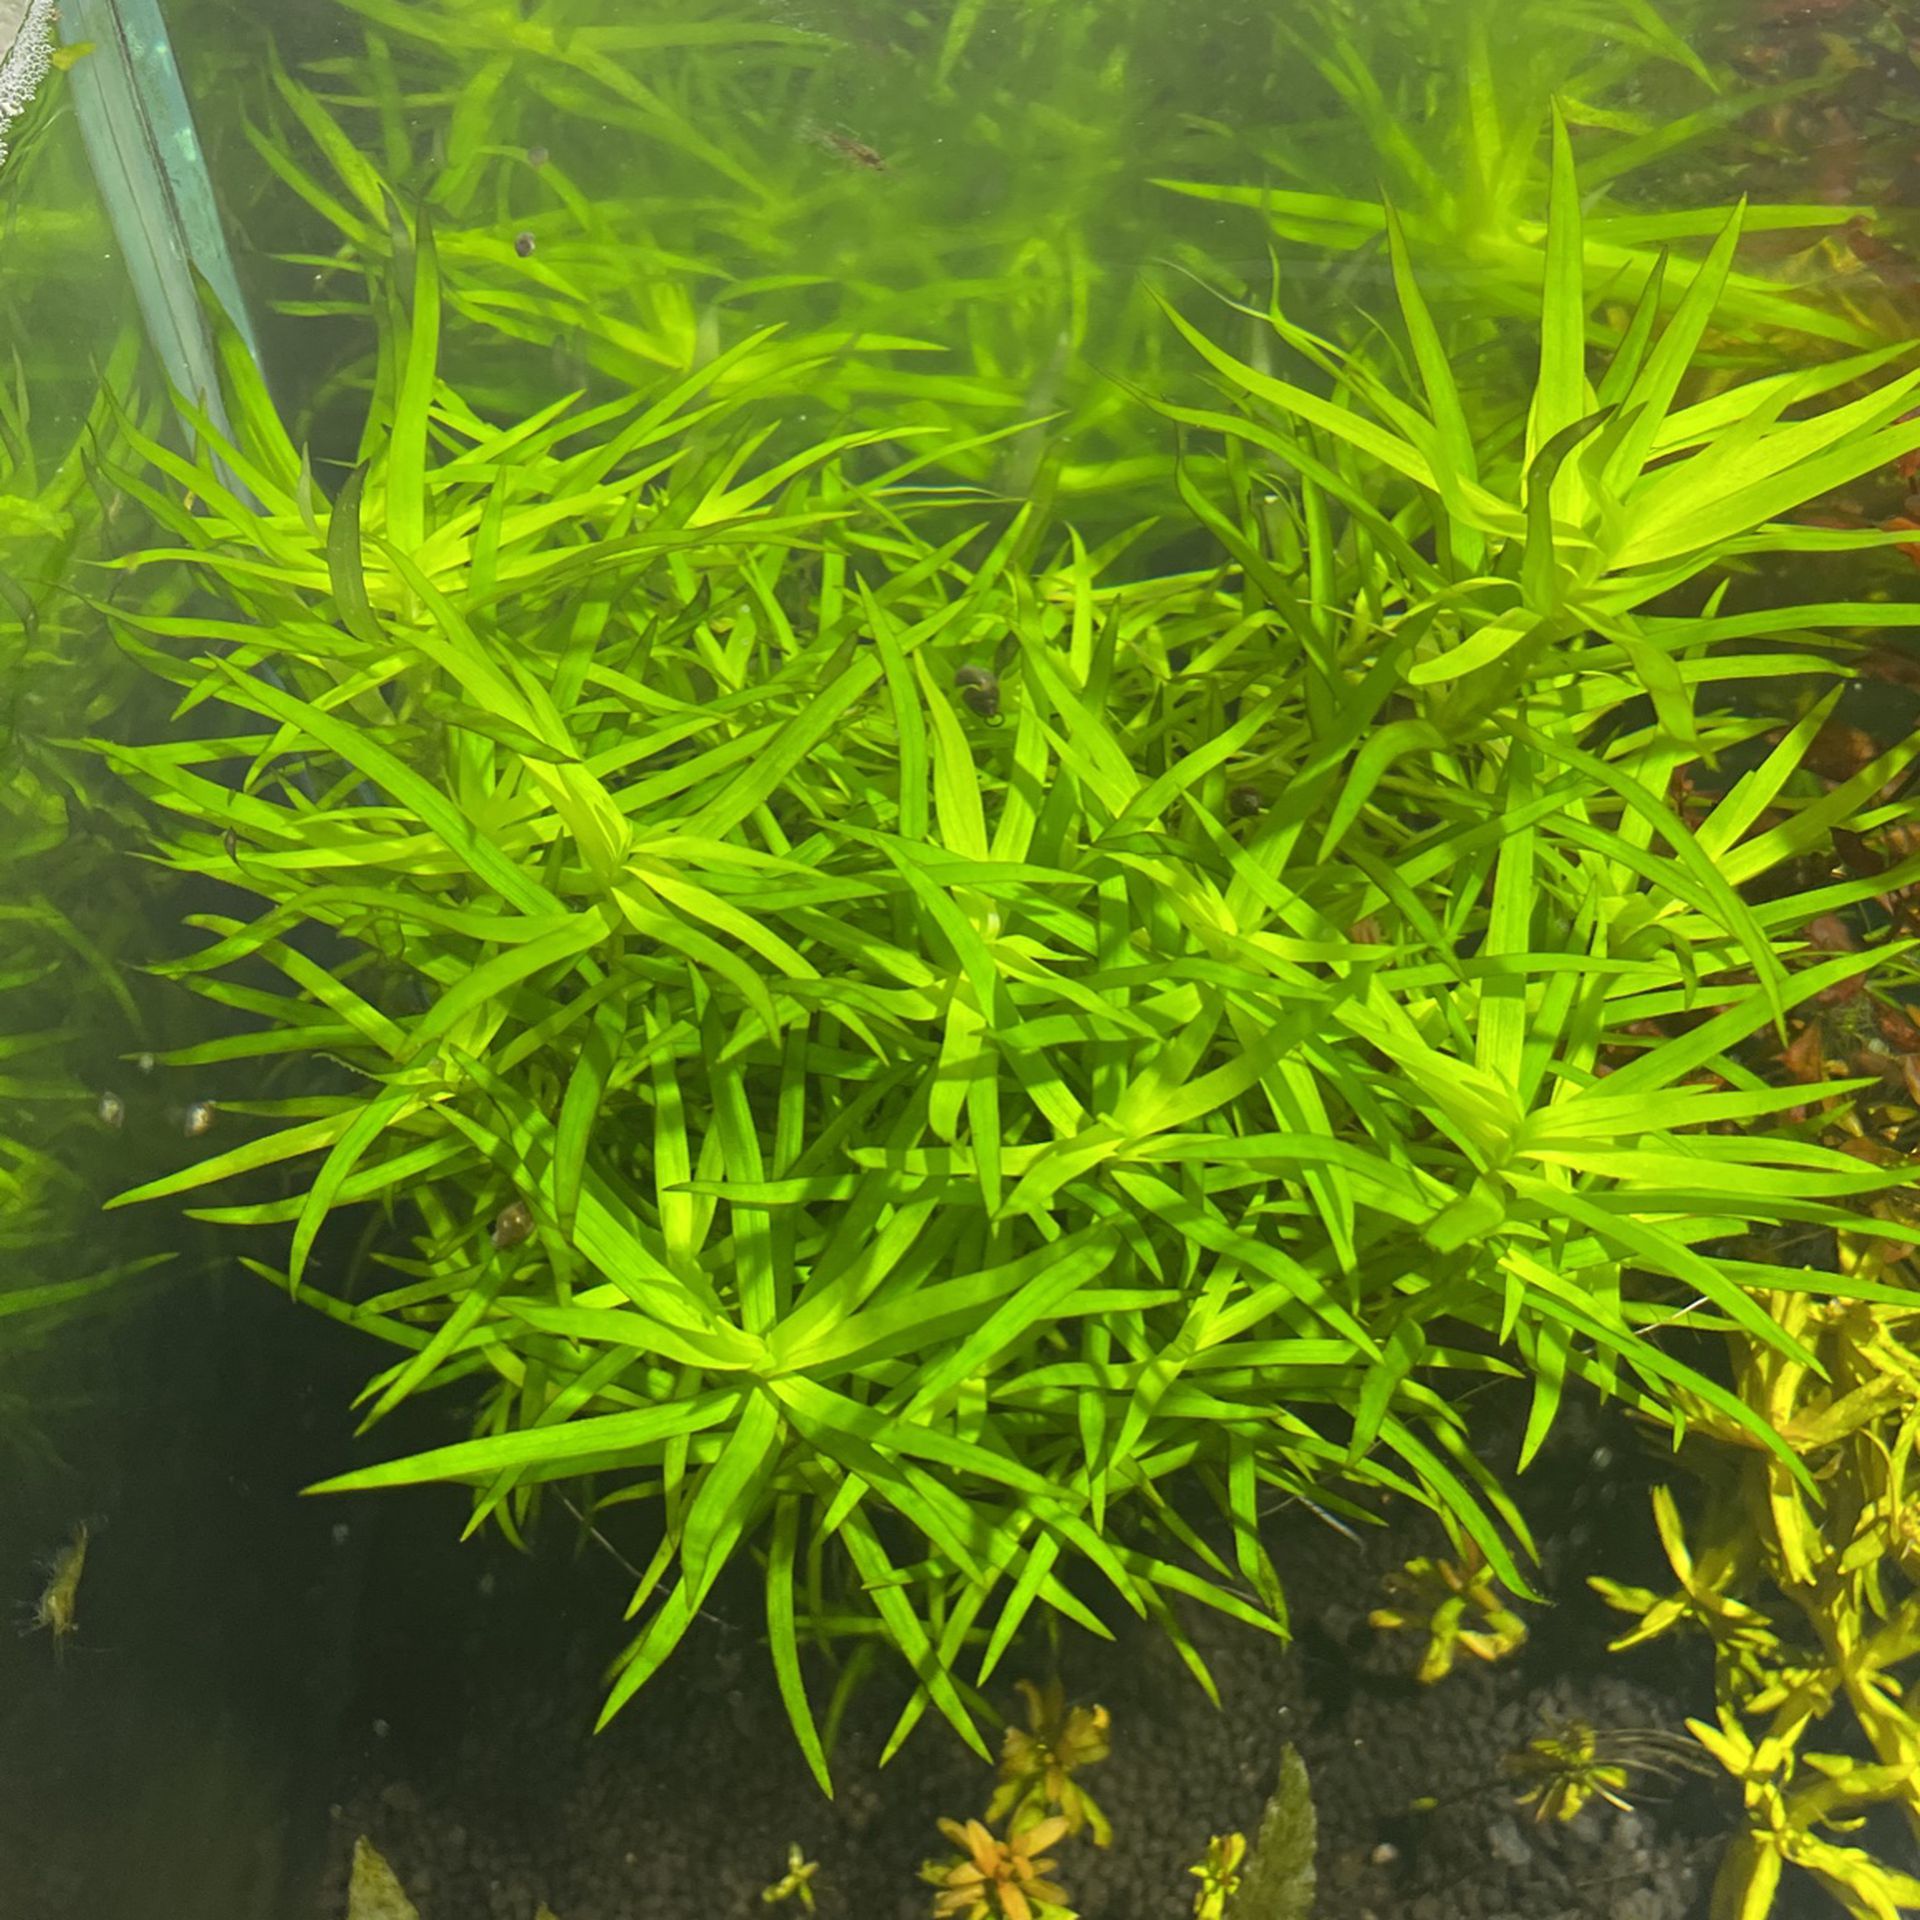 Live Aquatic Plant For Fish Tank Aquarium Zosterfolia “Star Grass”